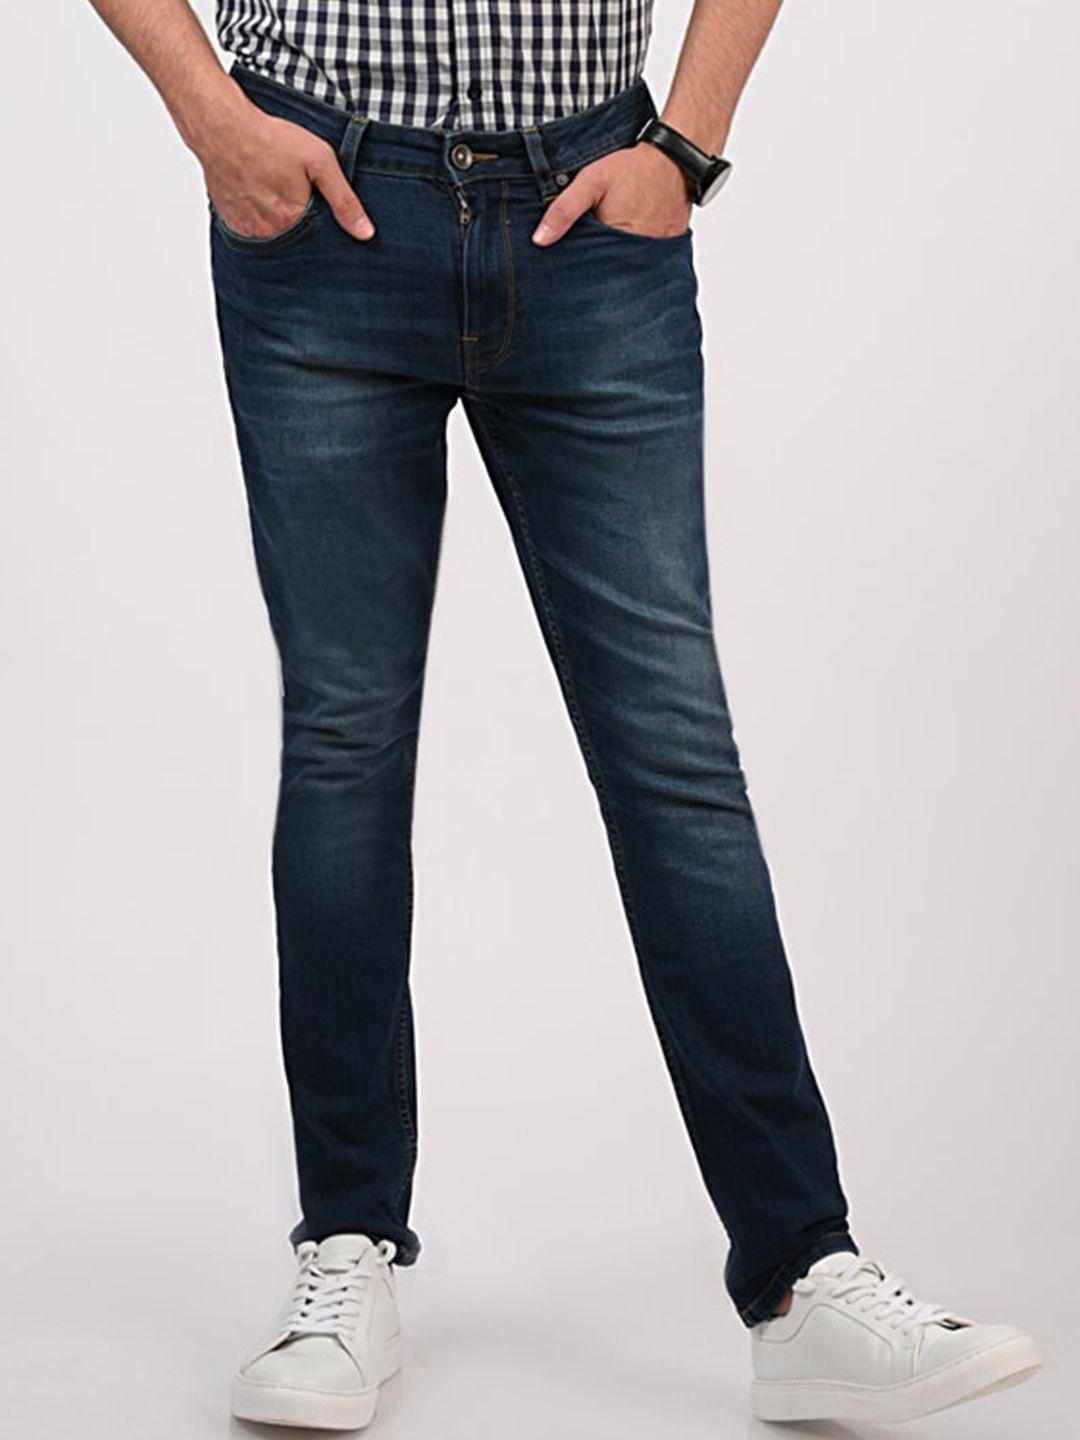 merchant marine men navy blue slim fit light fade jeans